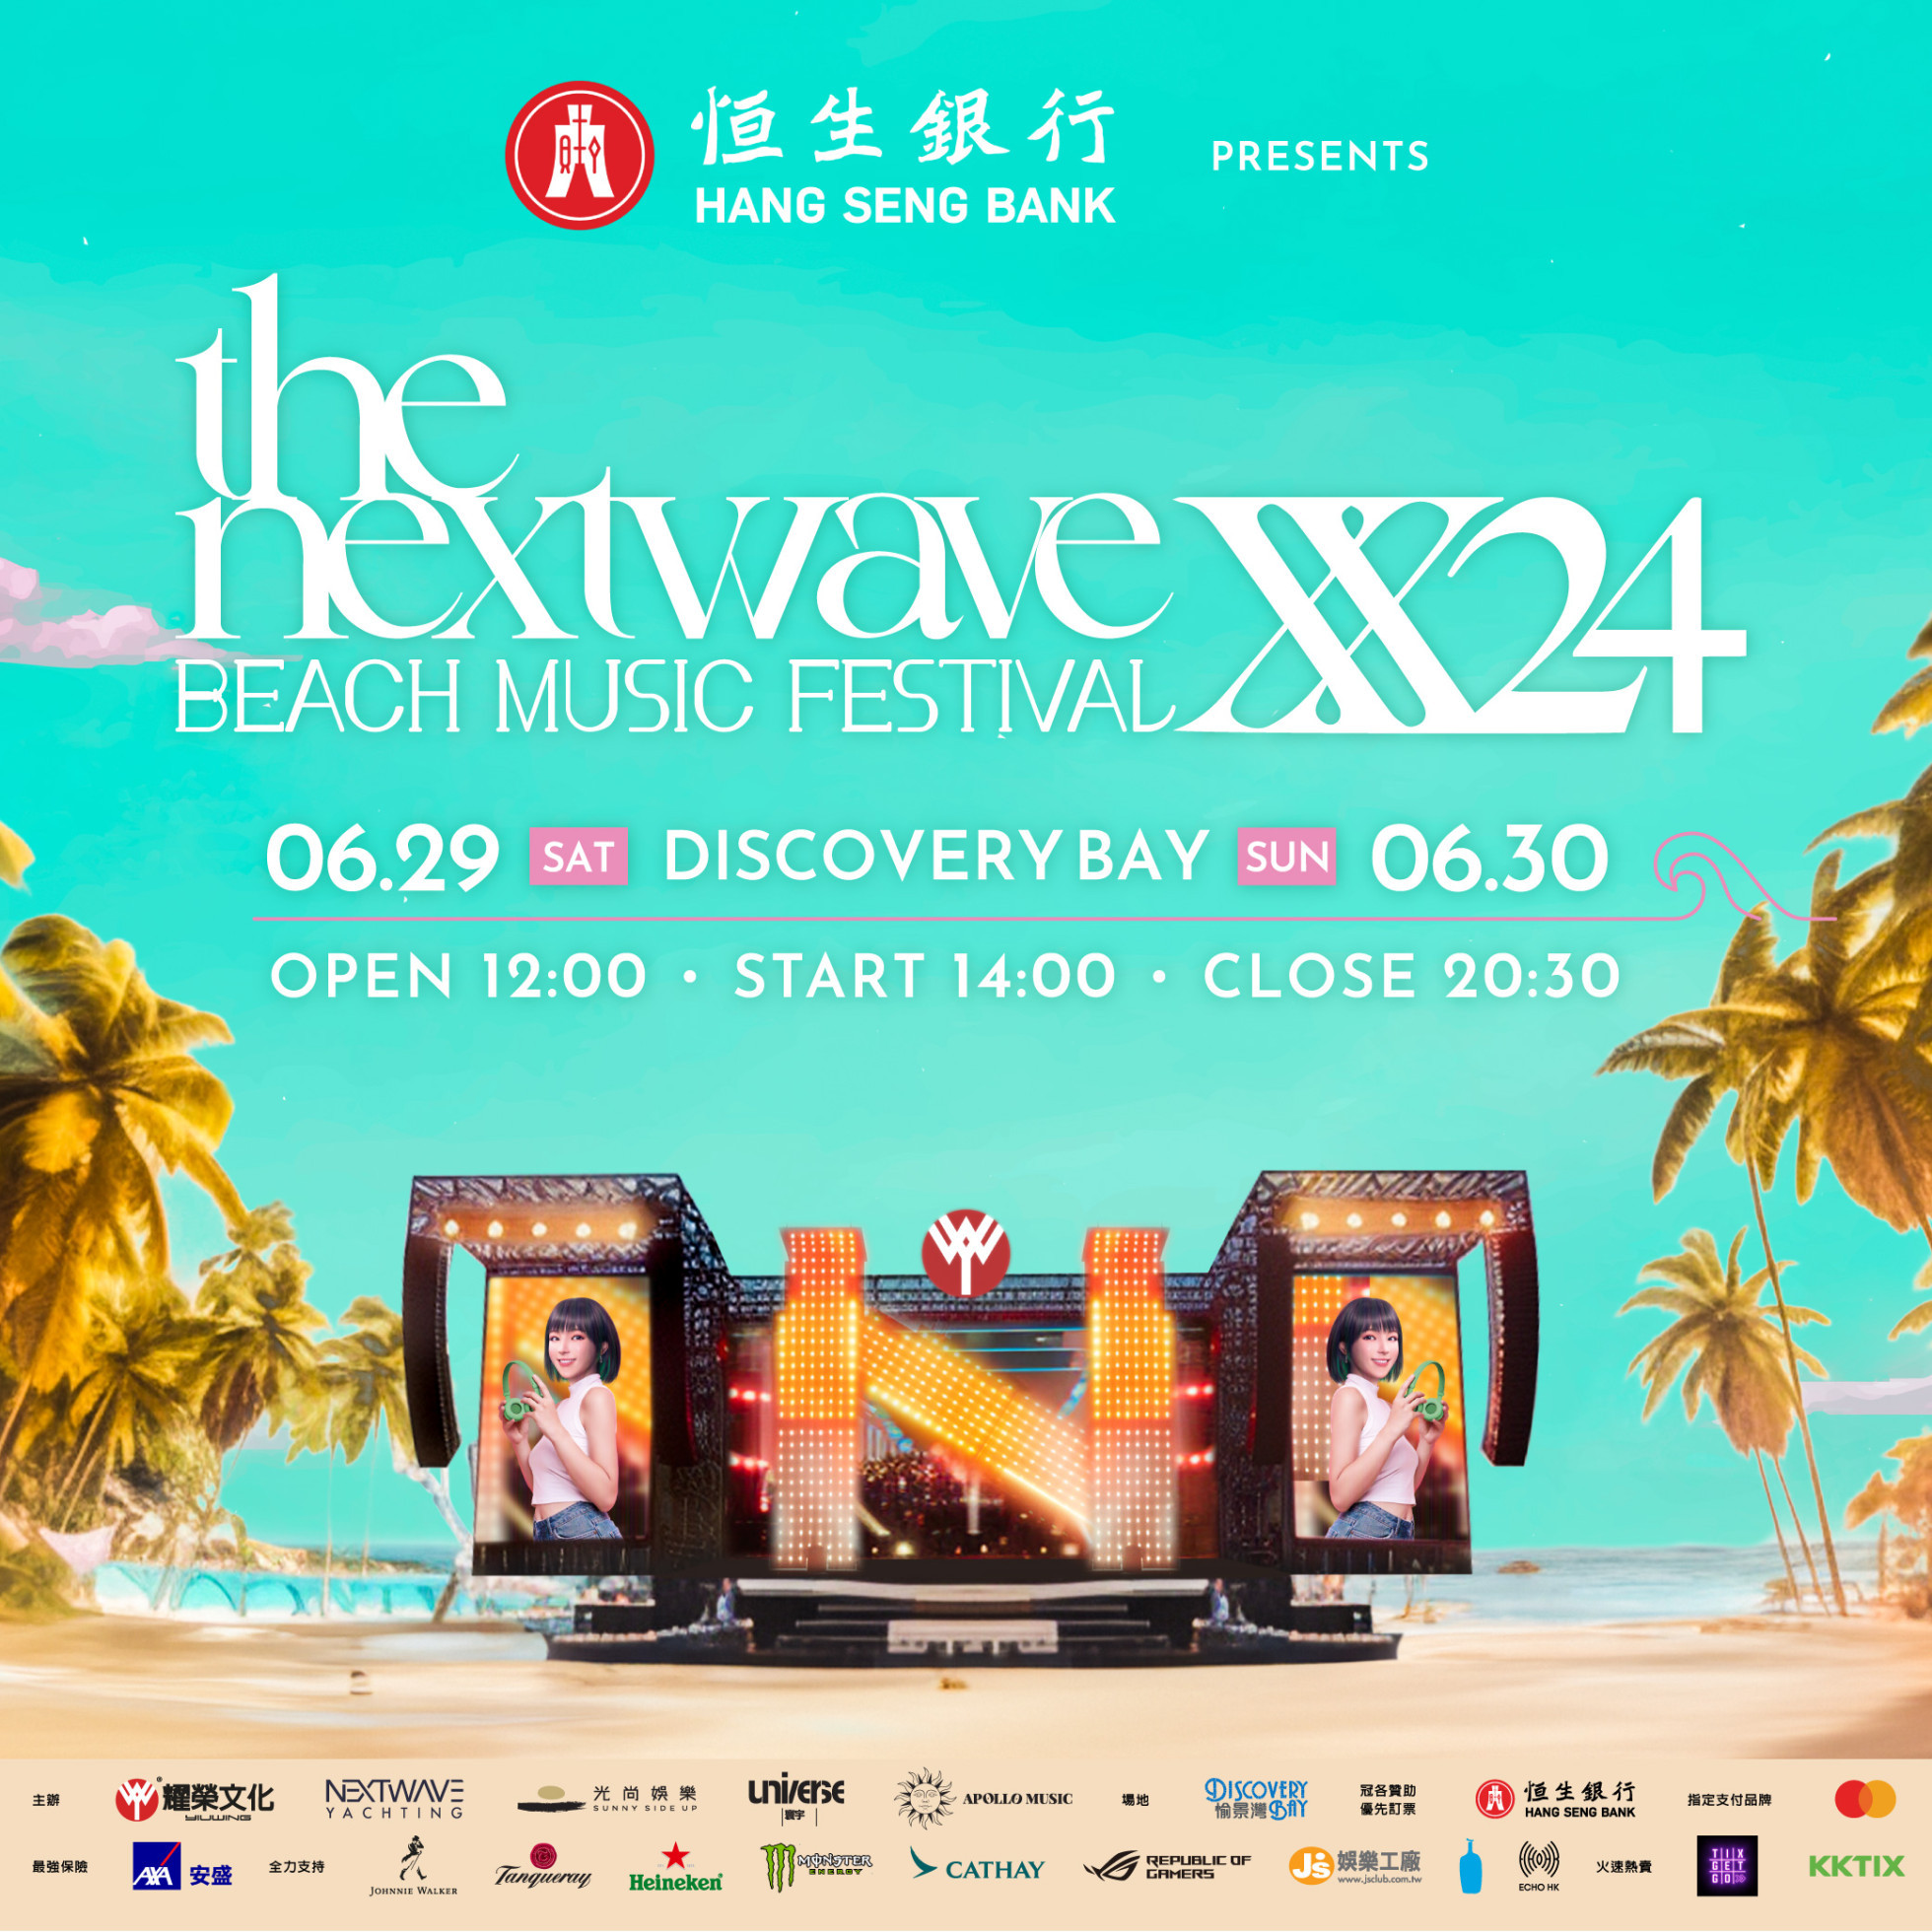 TheNextwave XX24 Beach Music Festival